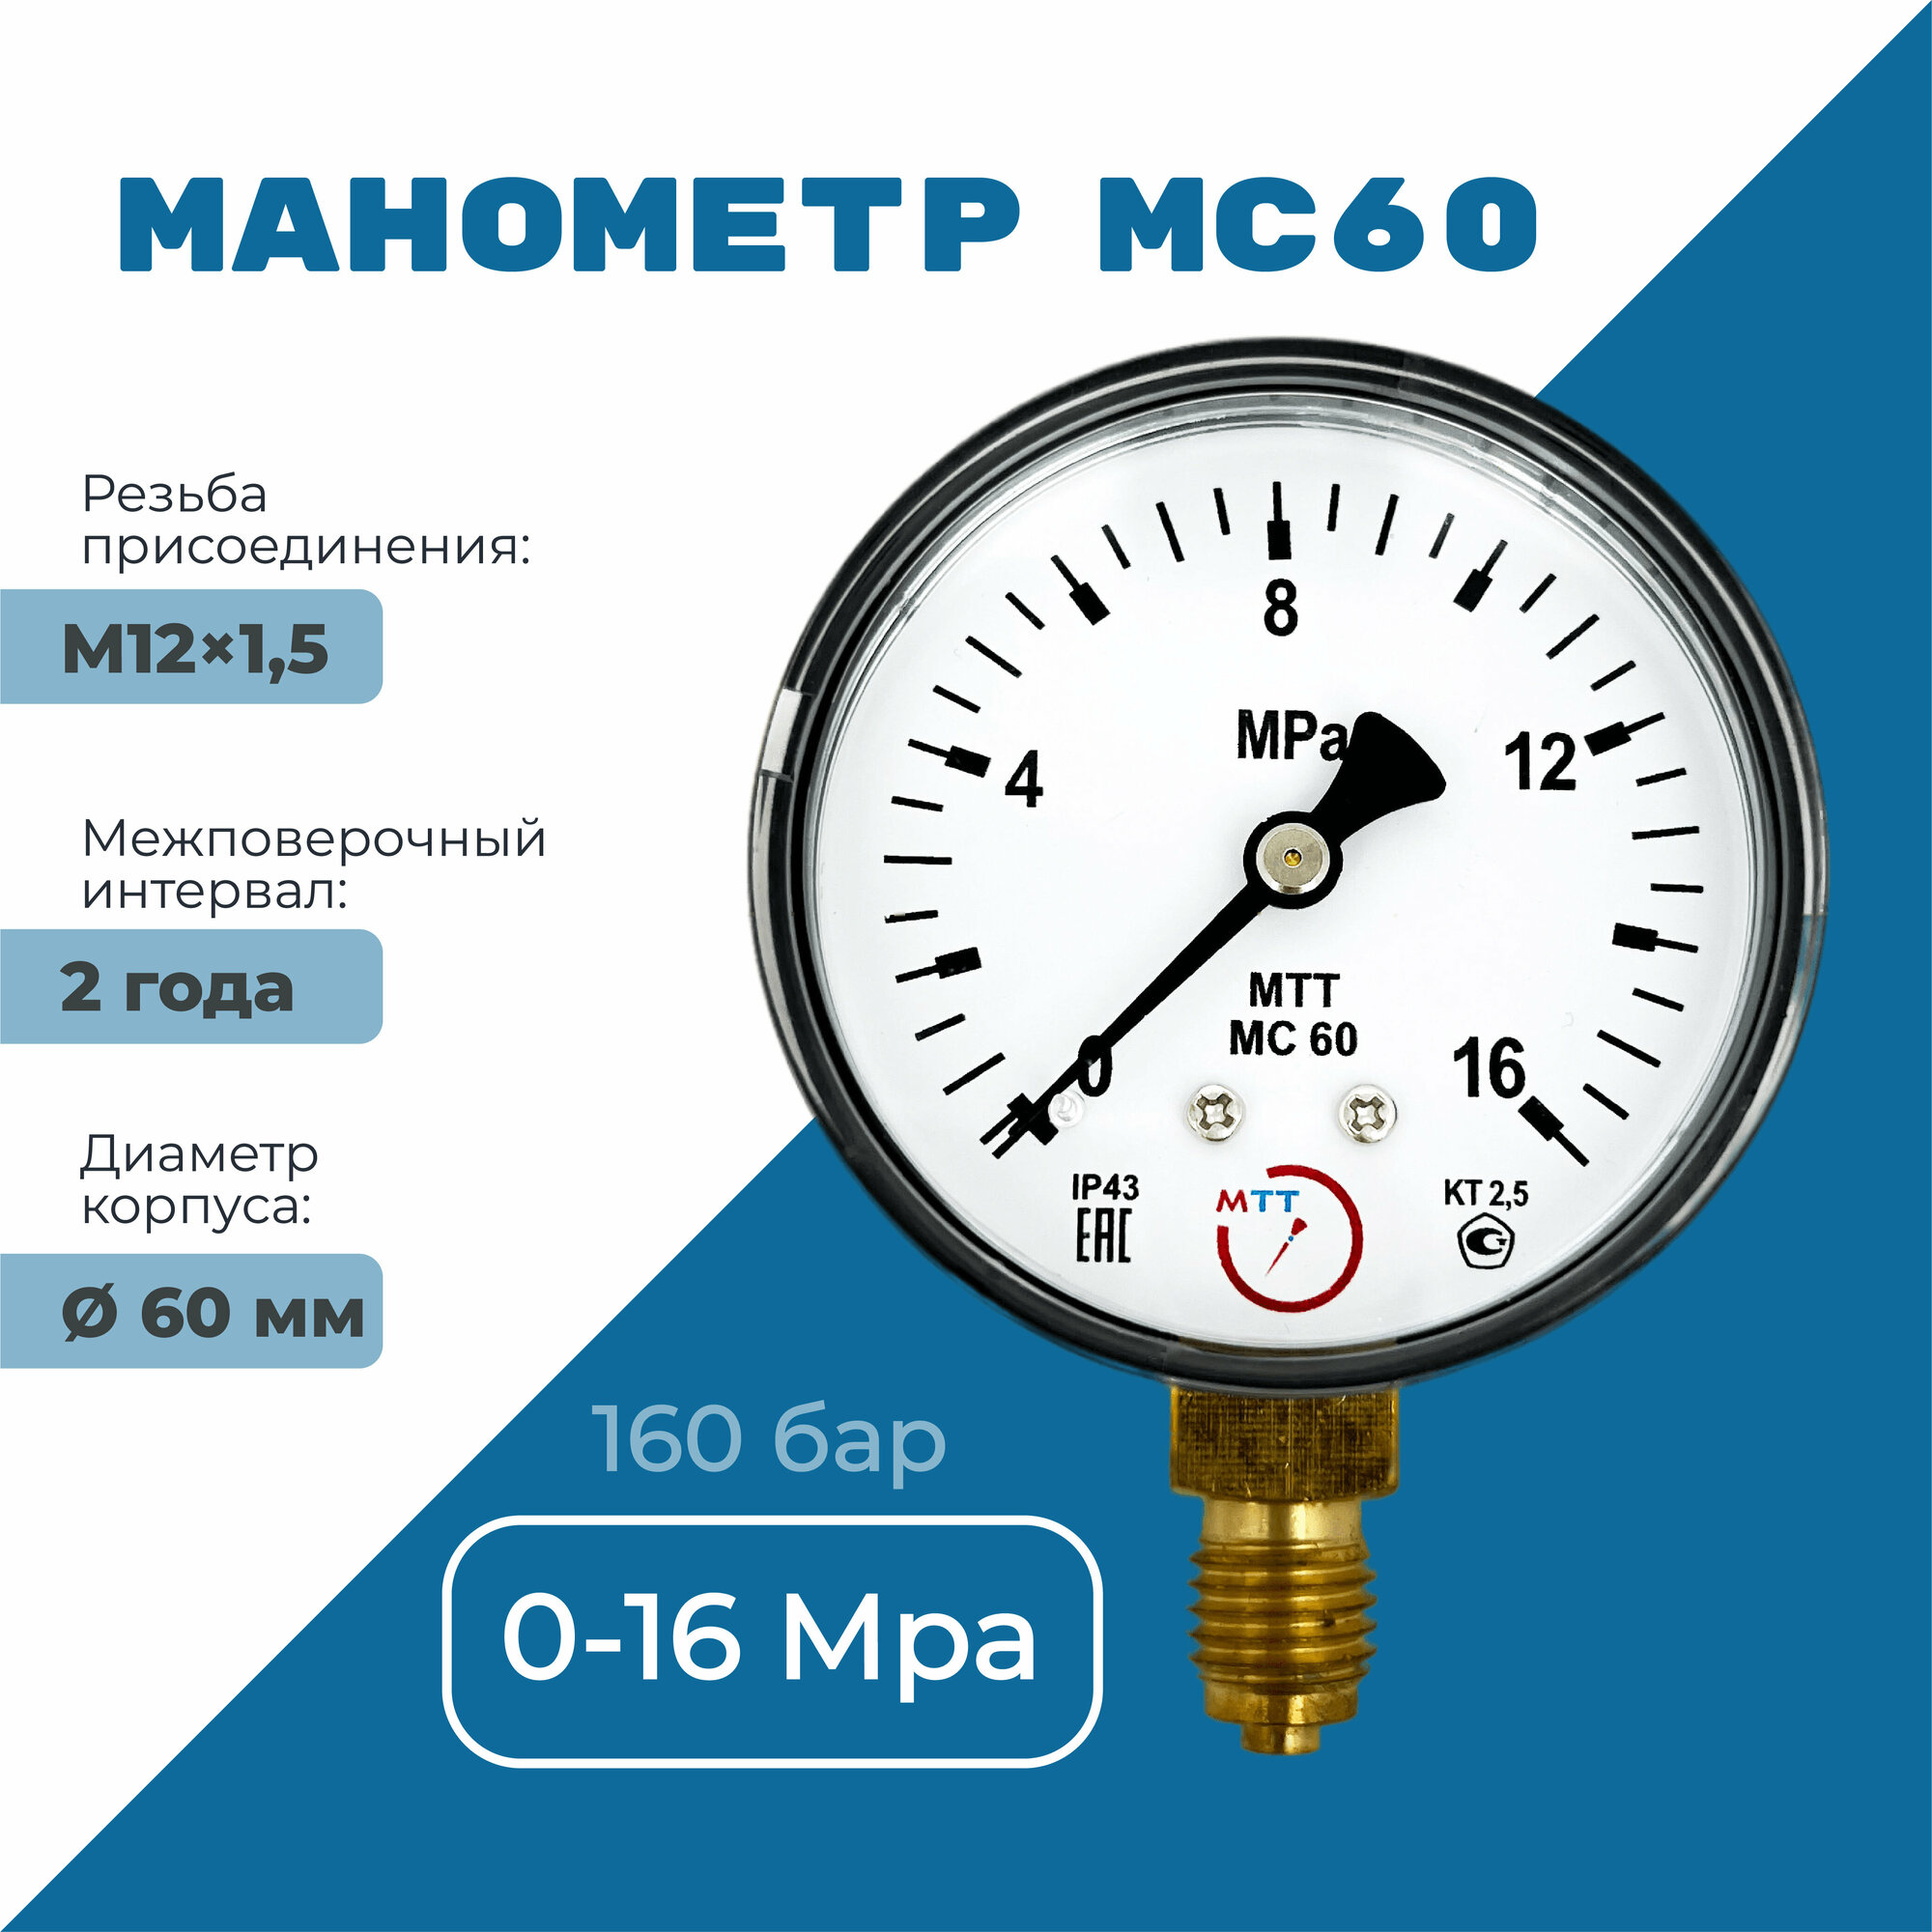 Манометр МС60 давление 0-16 МПа (160 бар) резьба М12х1.5 класс точности 2,5 корпус 62 мм. поверка 2 года